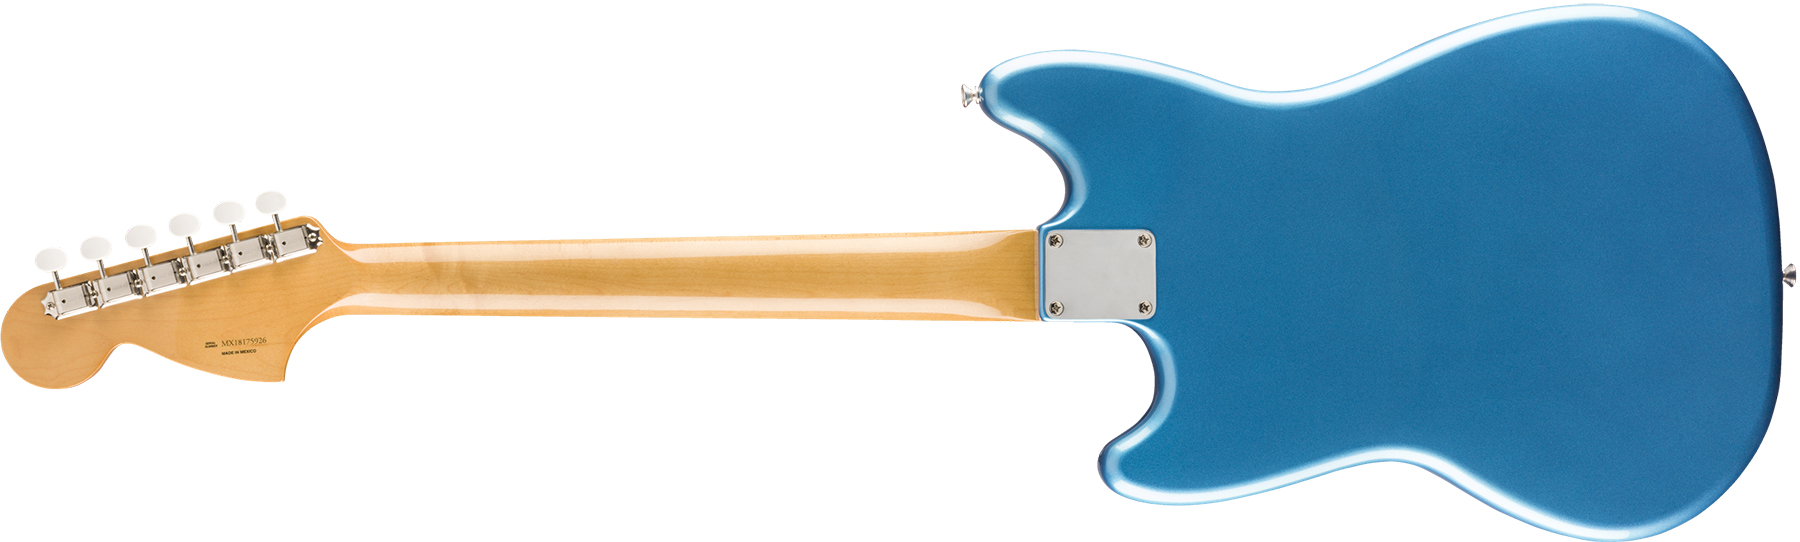 Fender Mustang 60s Vintera Vintage Mex Pf - Lake Placid Blue - Retro rock electric guitar - Variation 1